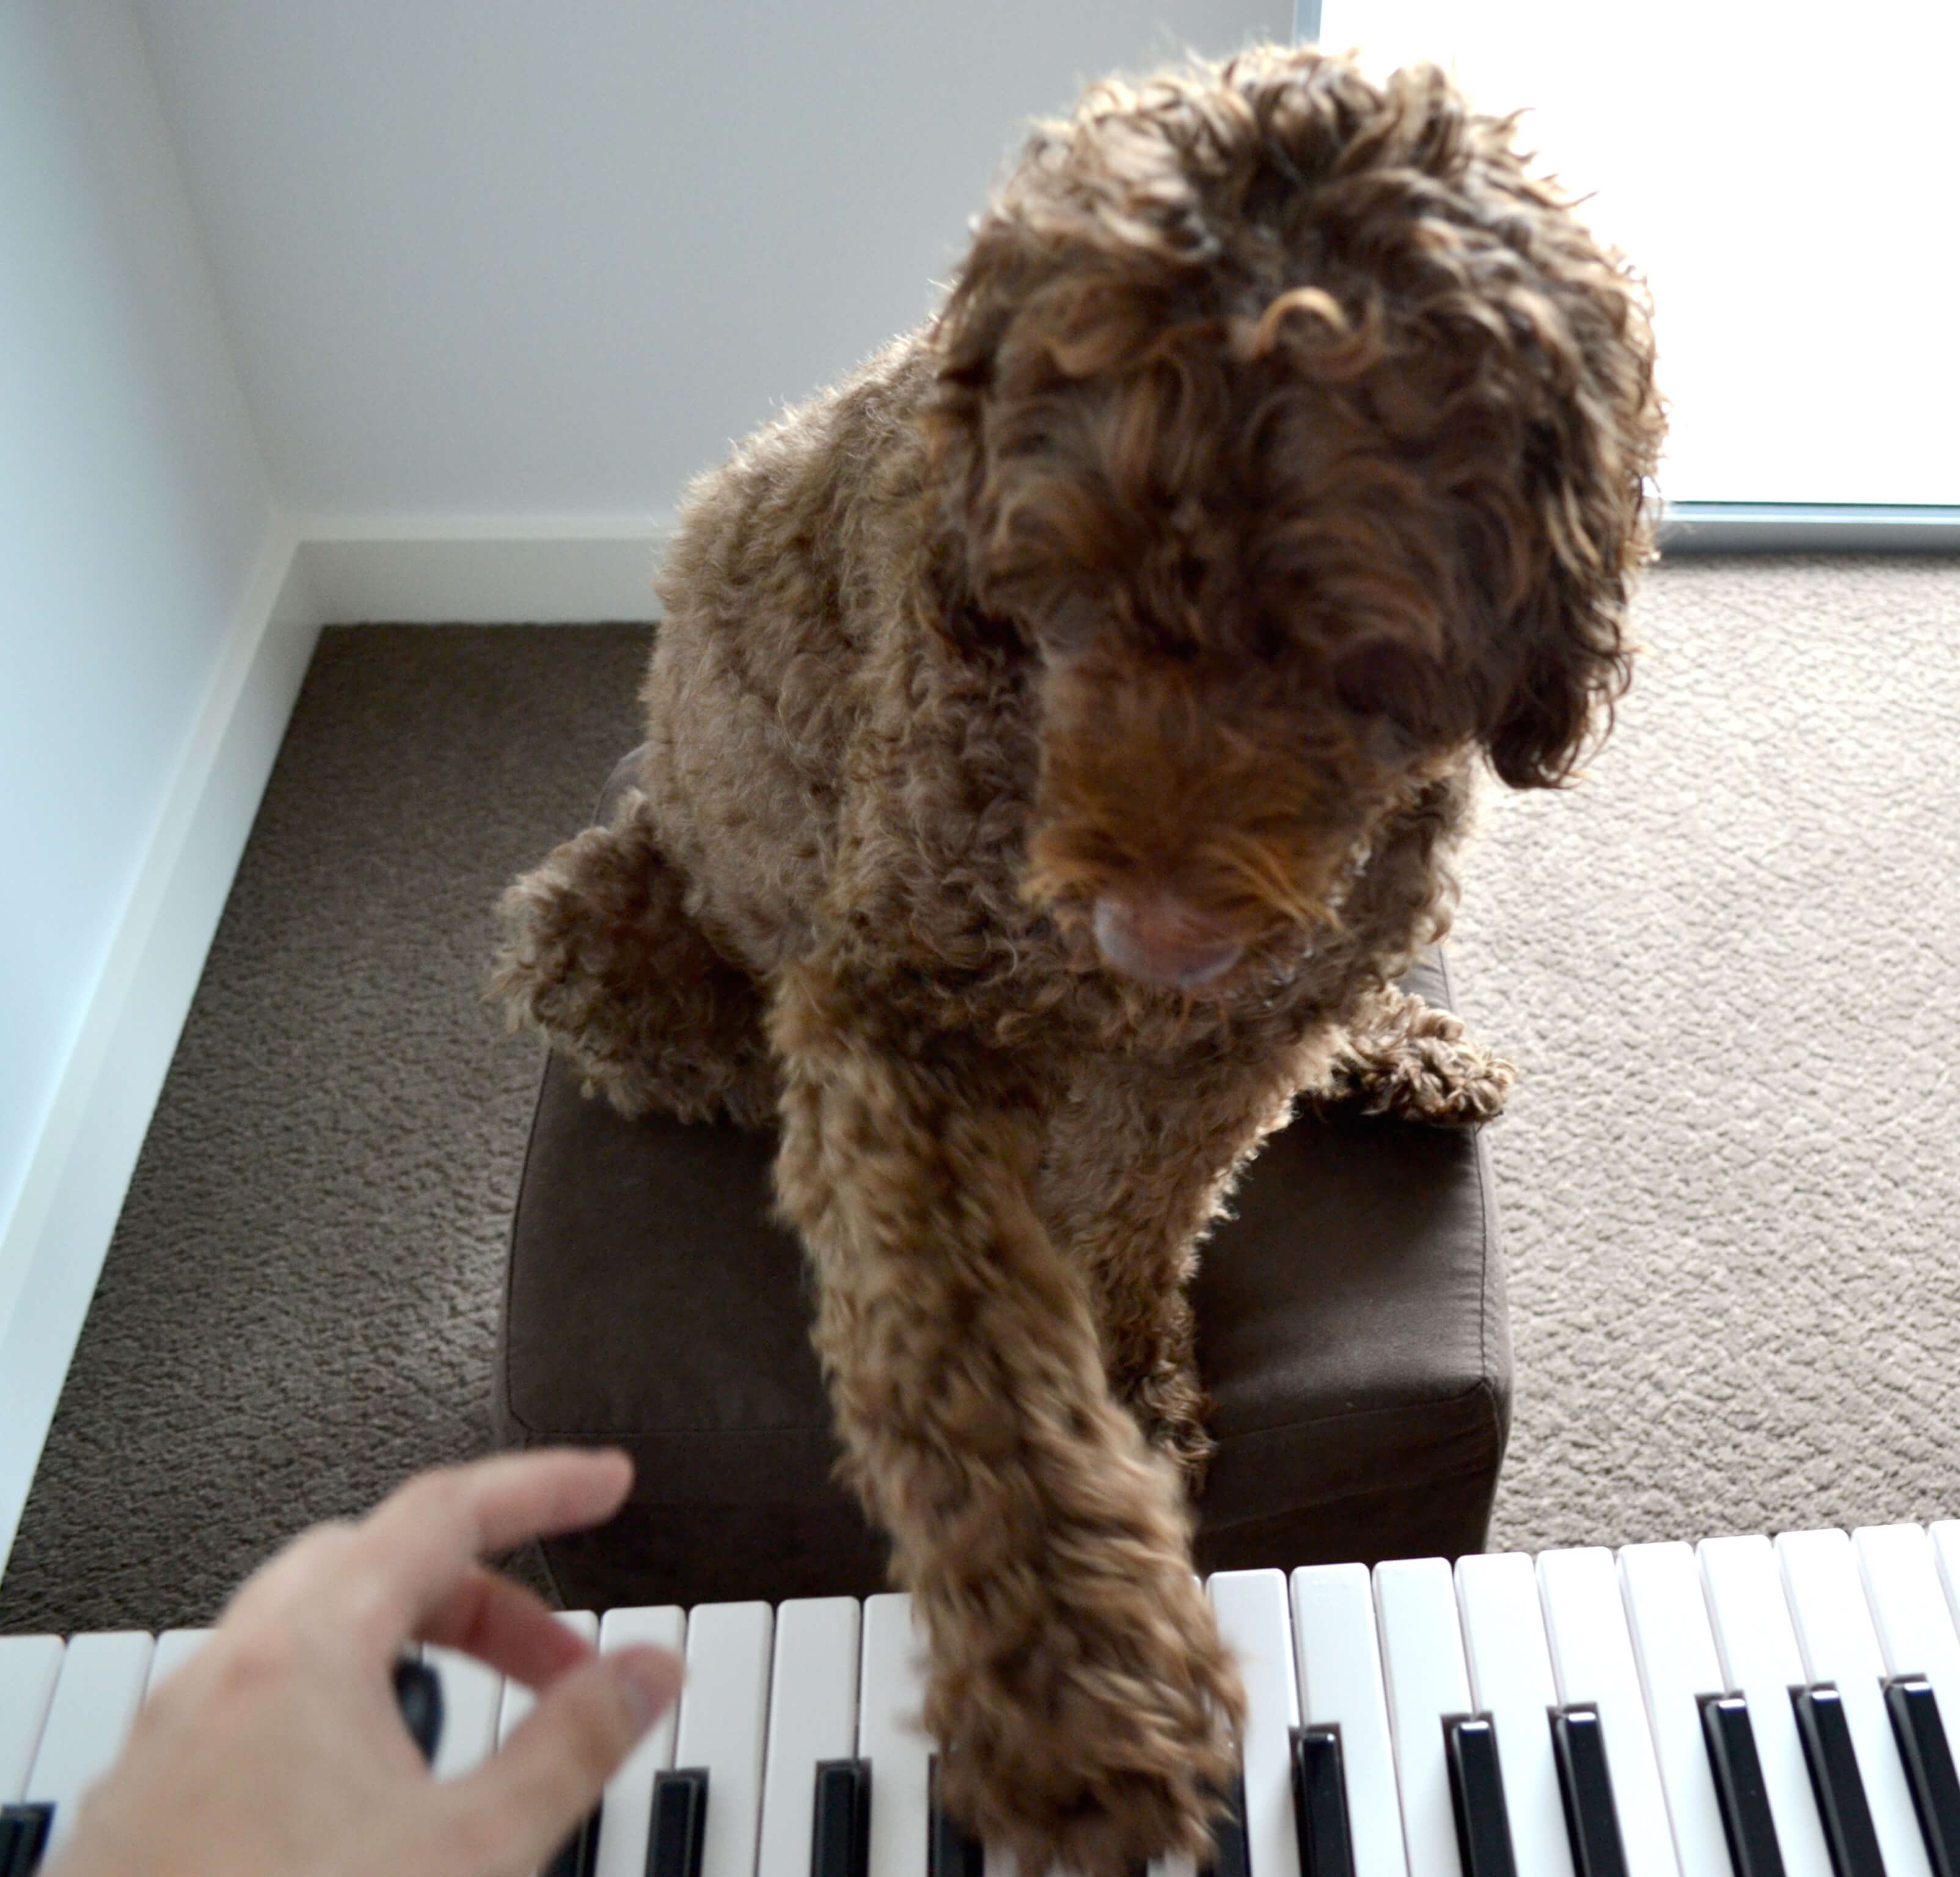 Hugo the dog practicing piano